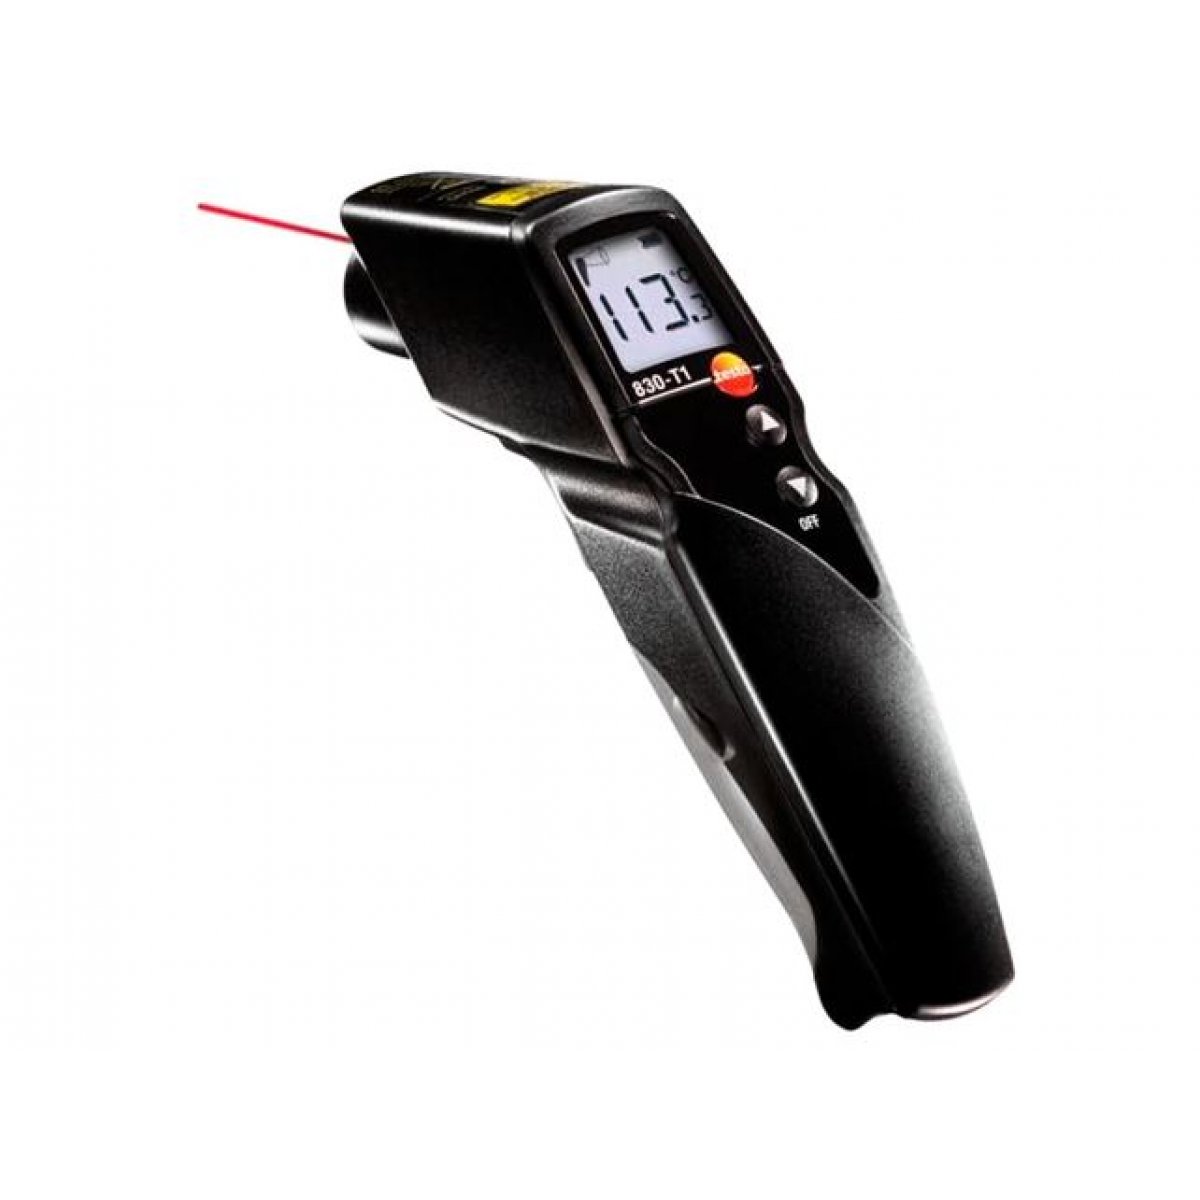 testo 830-T1 - Lazer İşaretlemeli İnfrared Termometre (10:1 optik)